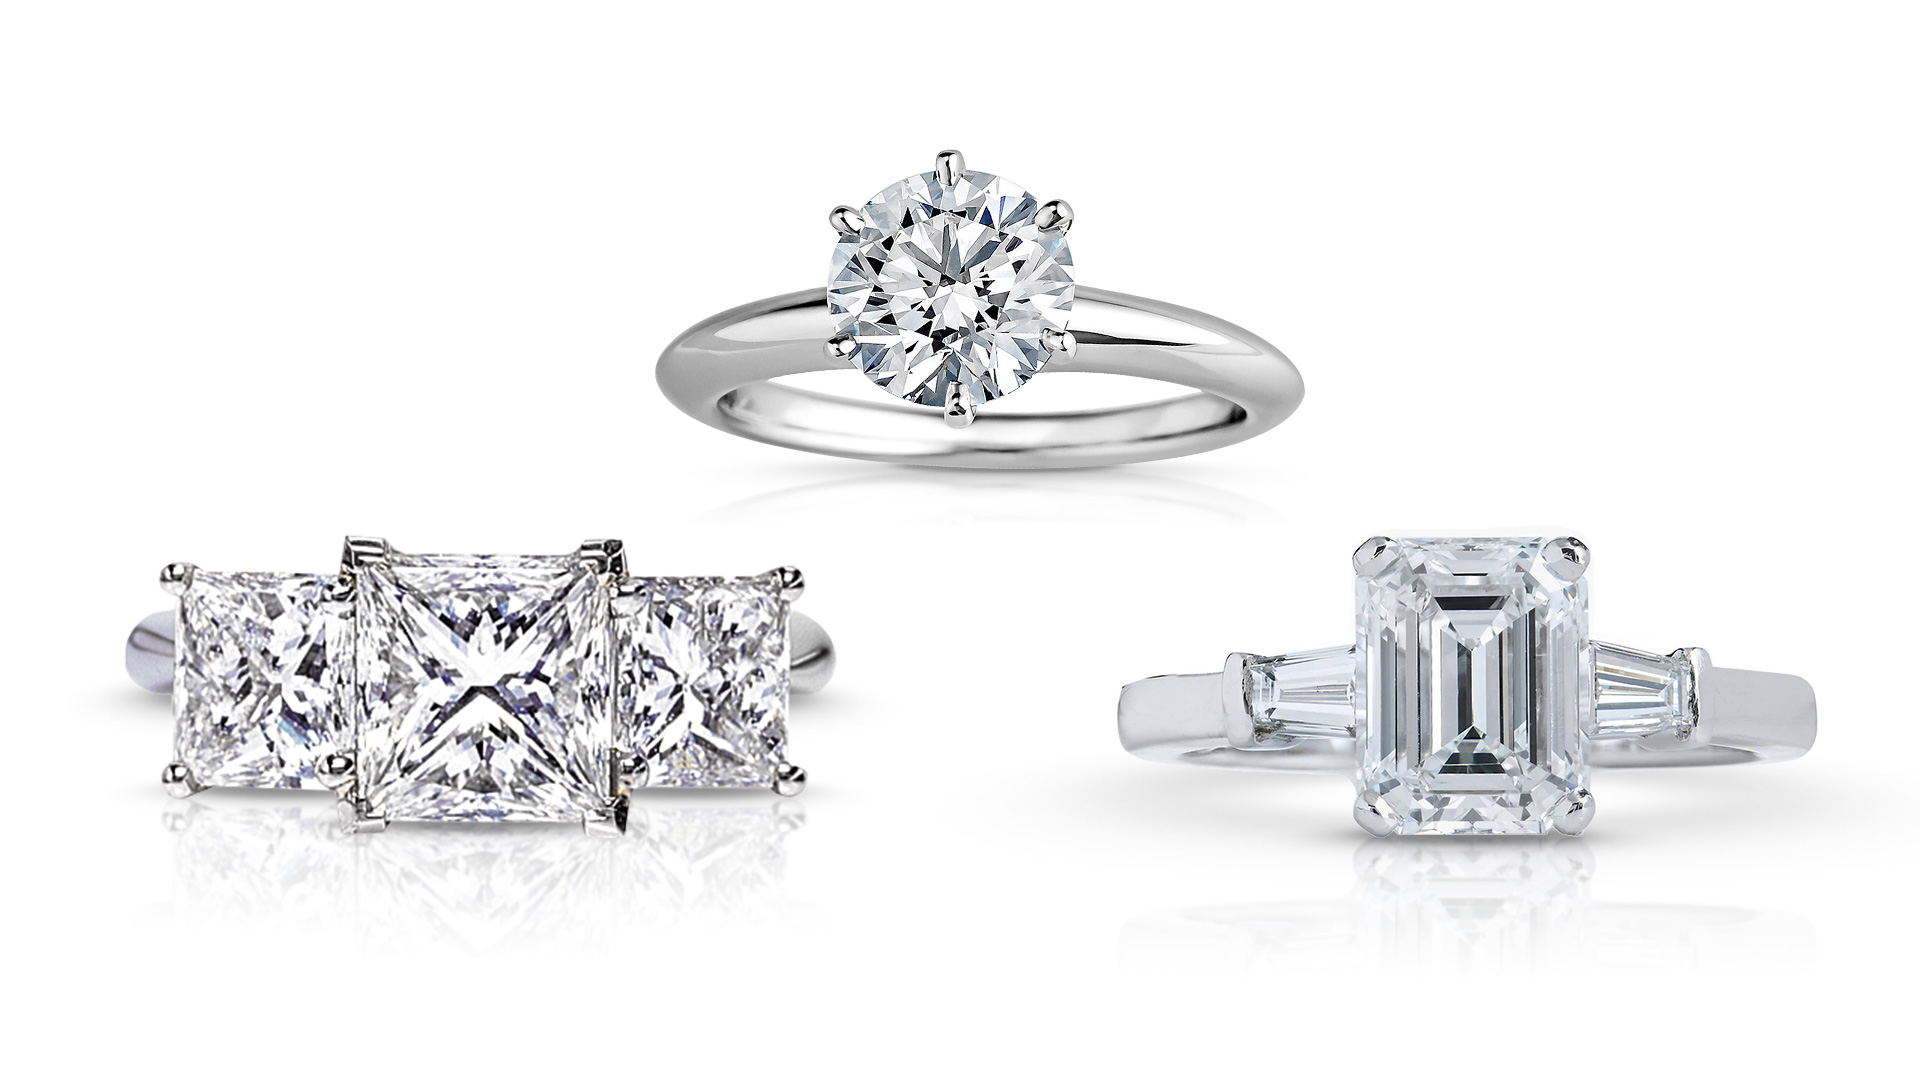 Three diamond engagement rings - princess cut three stone diamond ring, round brilliant solitaire diamond ring, and emerald cut diamond ring with tapered baguette sidestones.